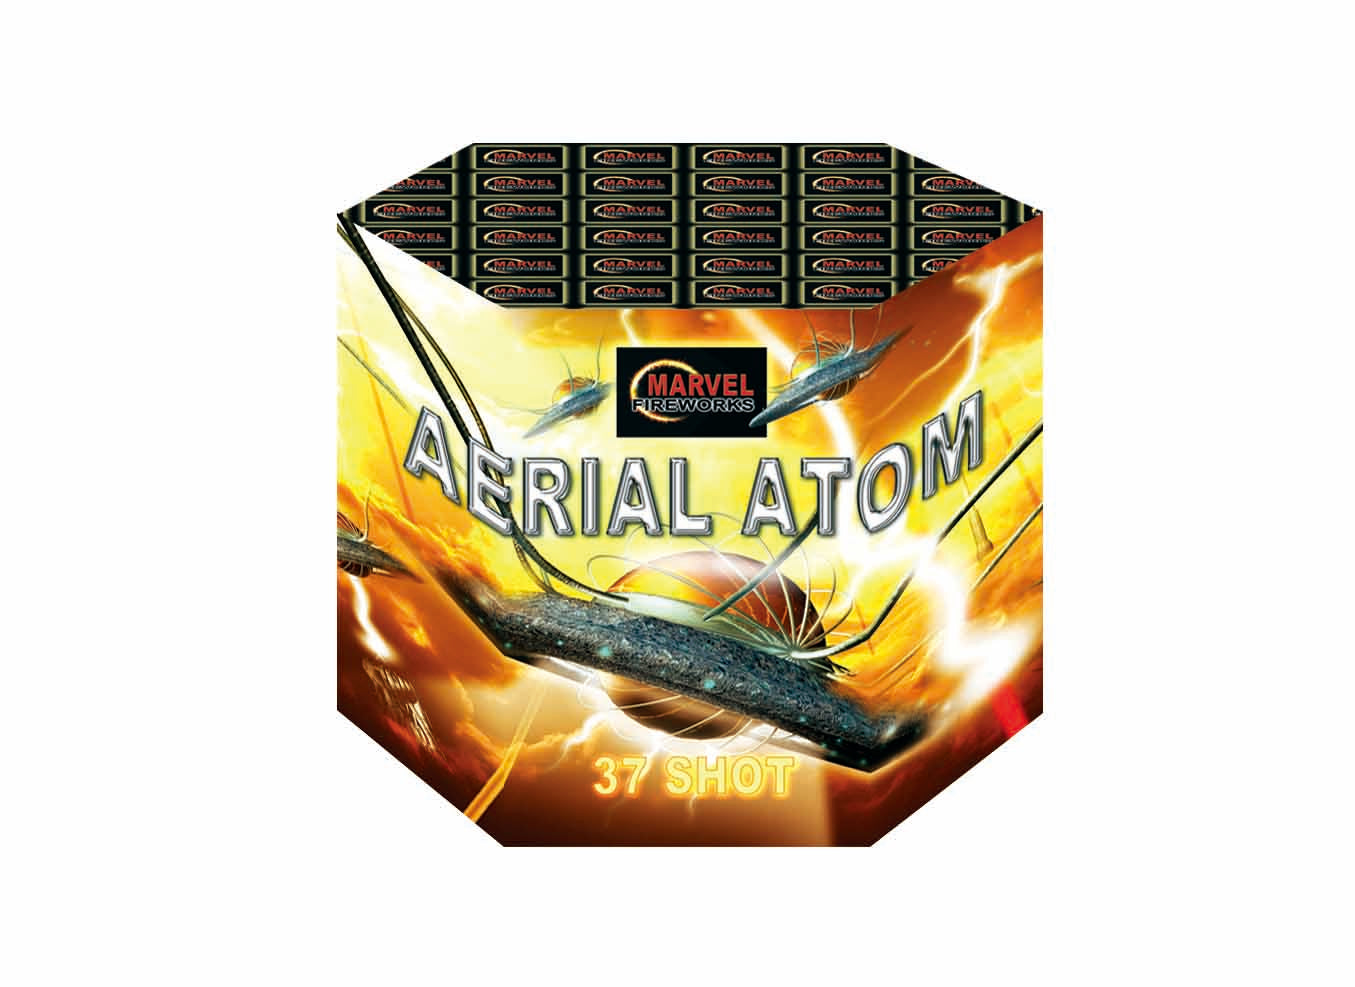 New for 08: Aerial Atom